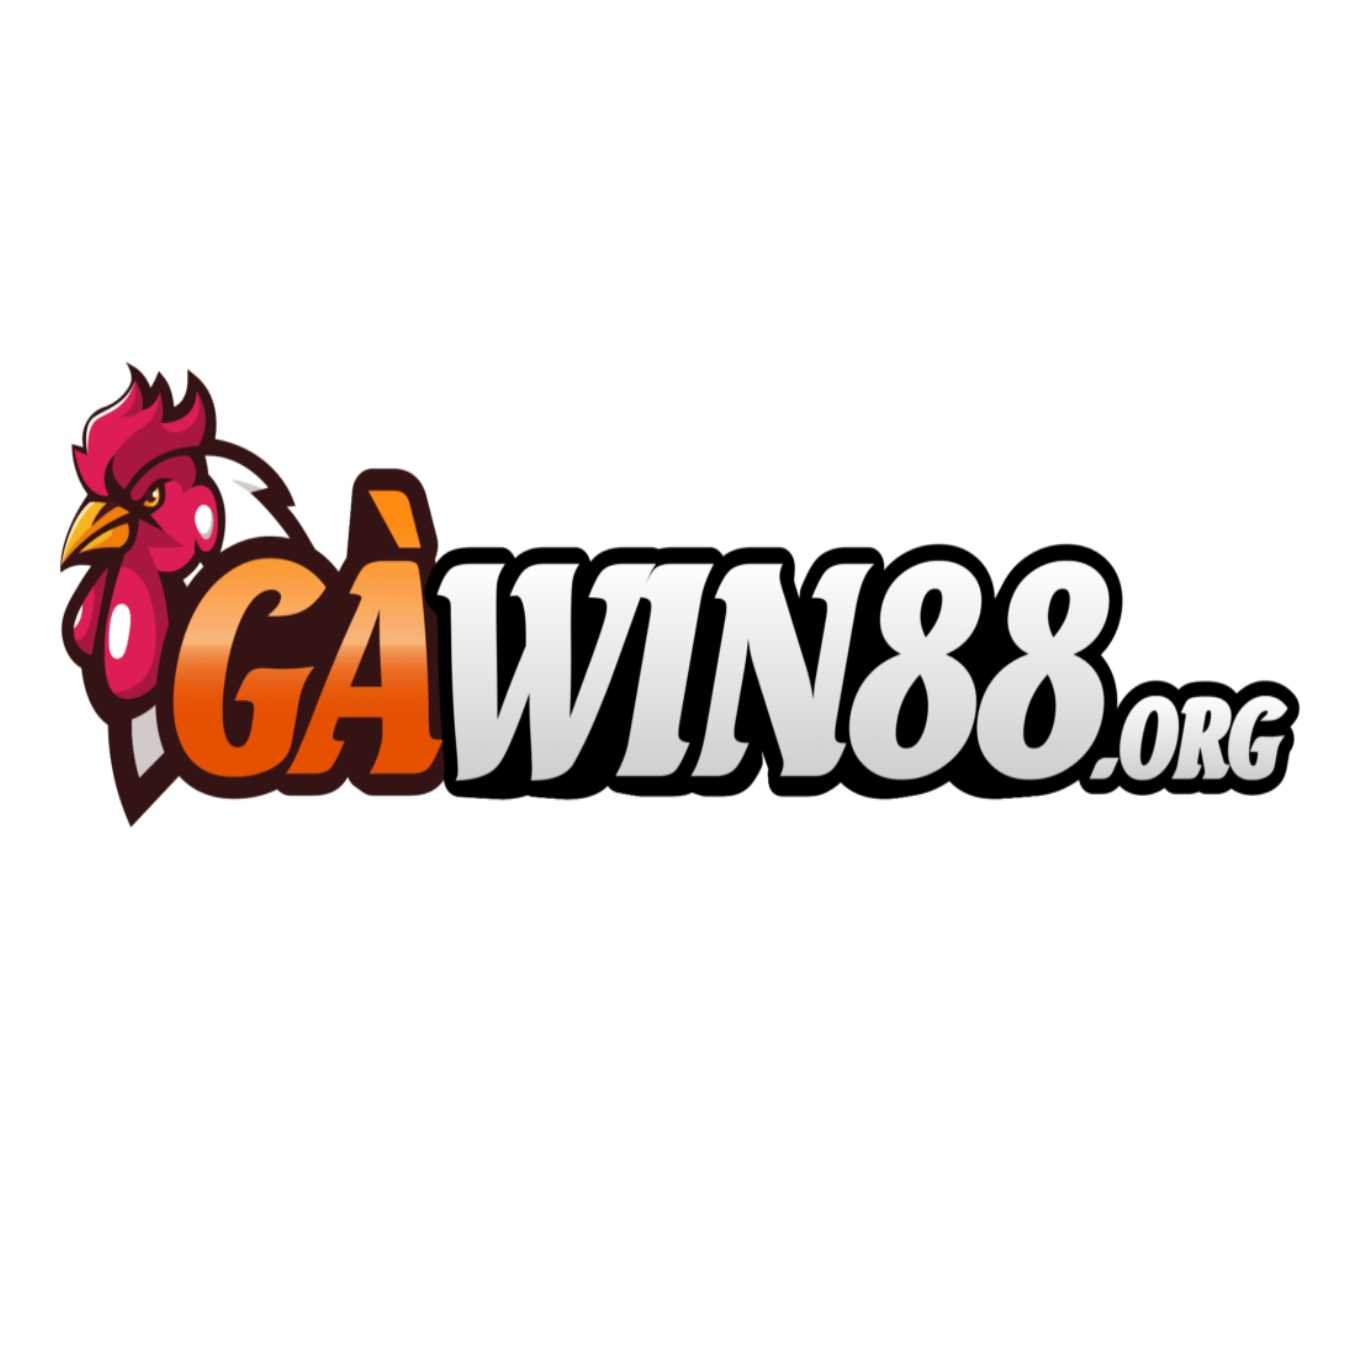 Gawin88 Org